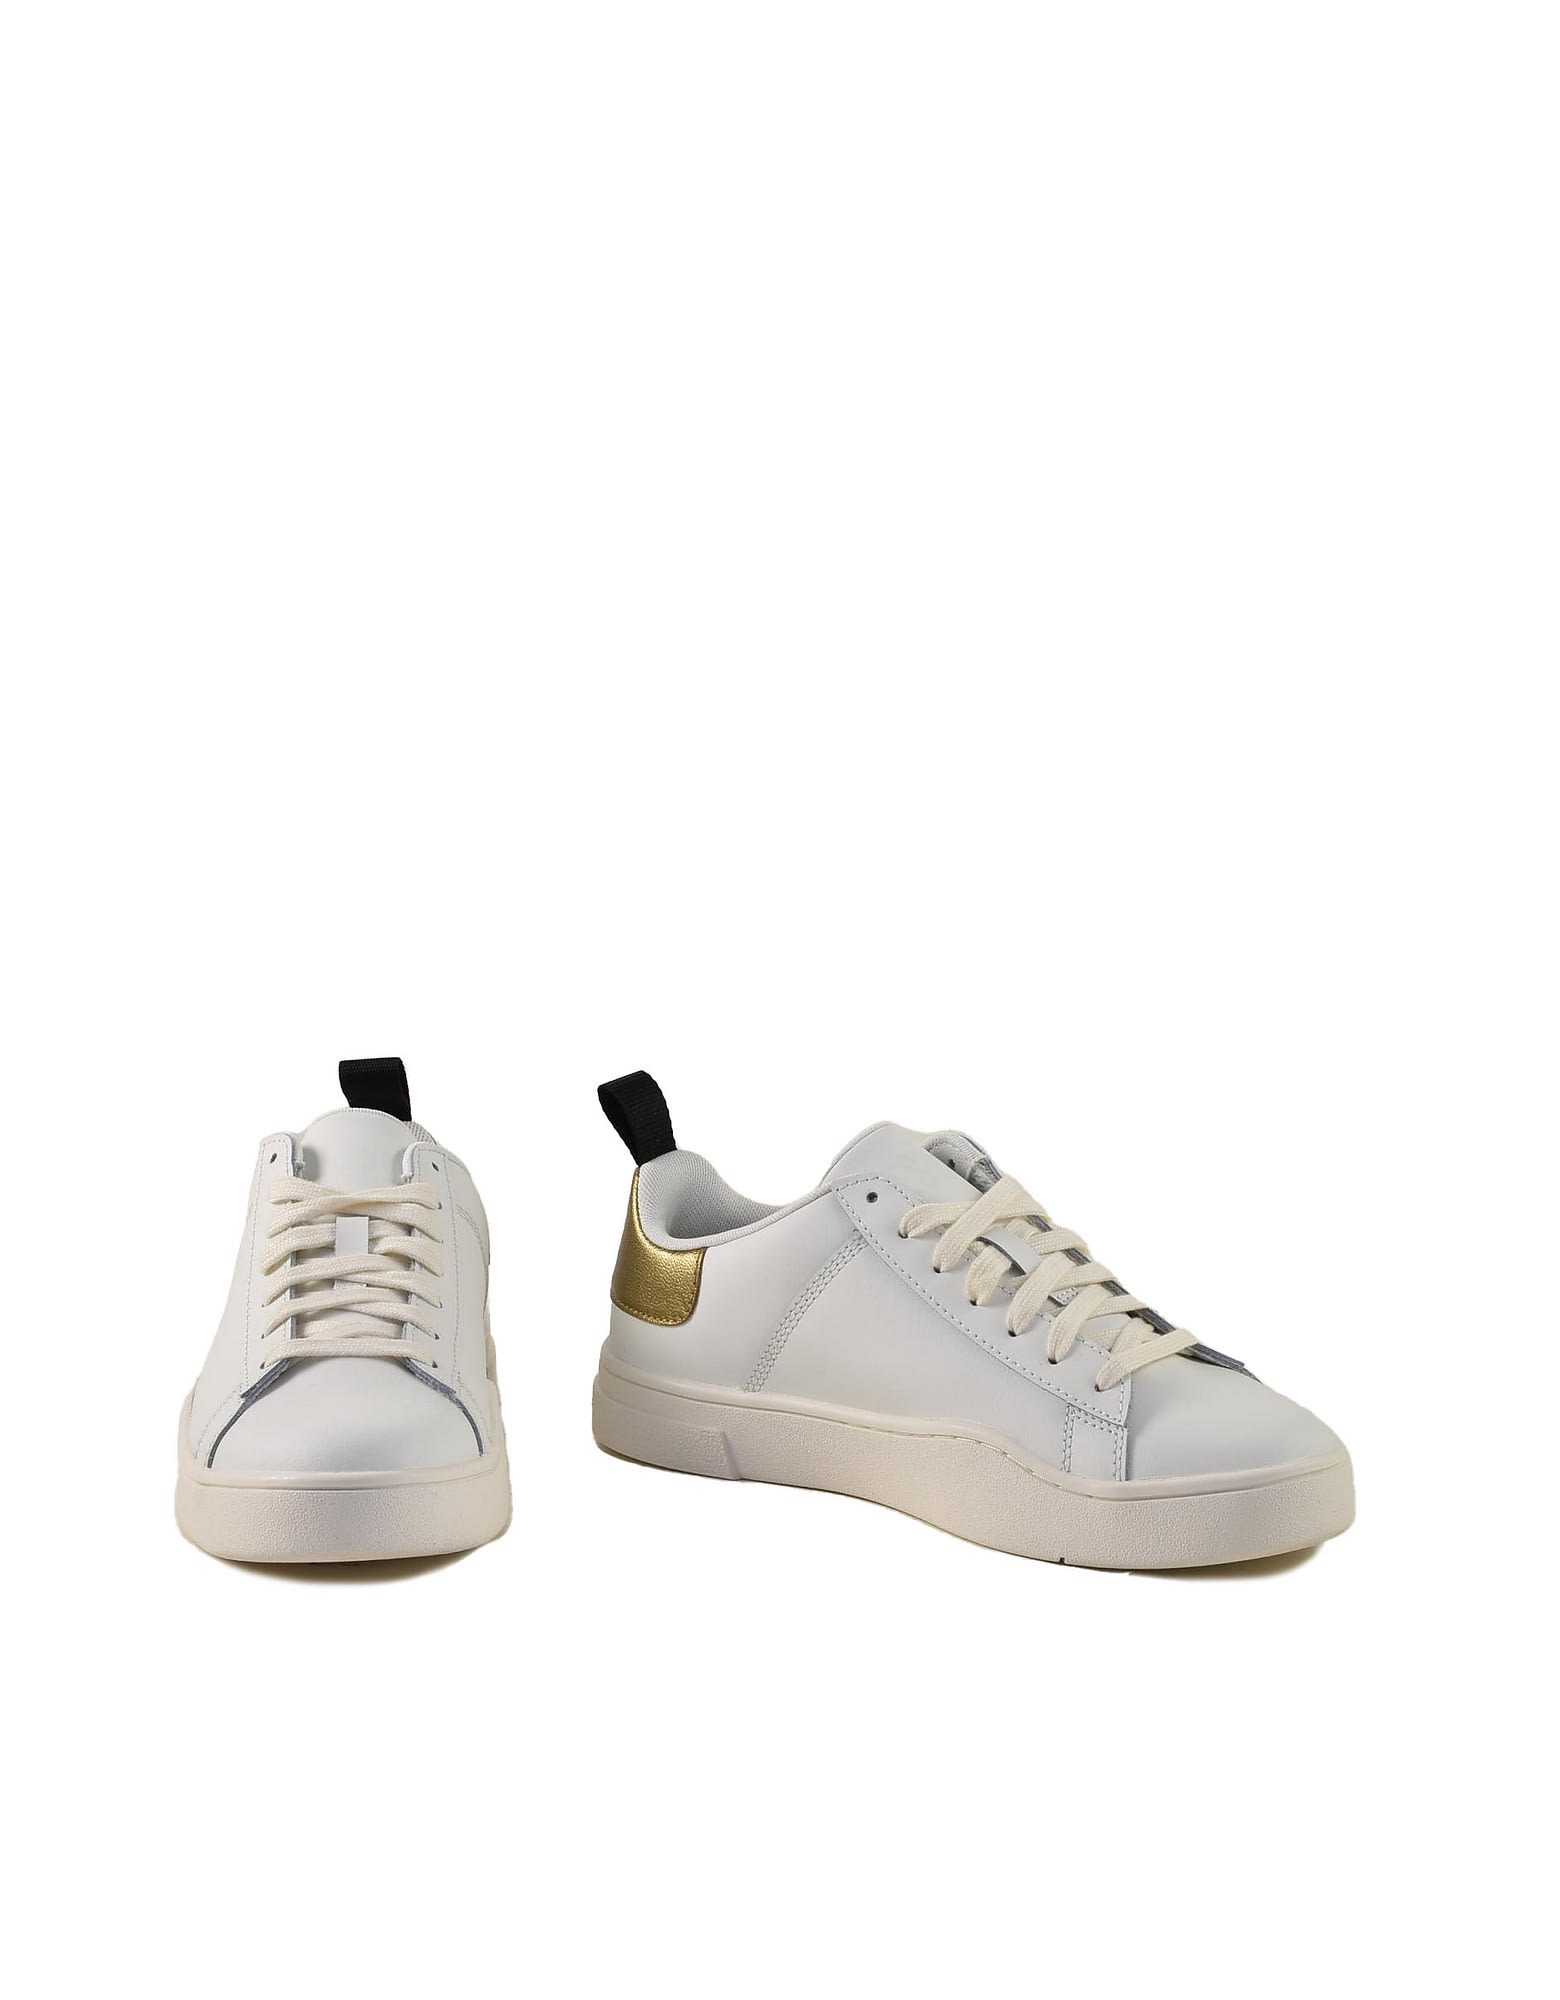 Diesel Womens Gold / White Sneakers